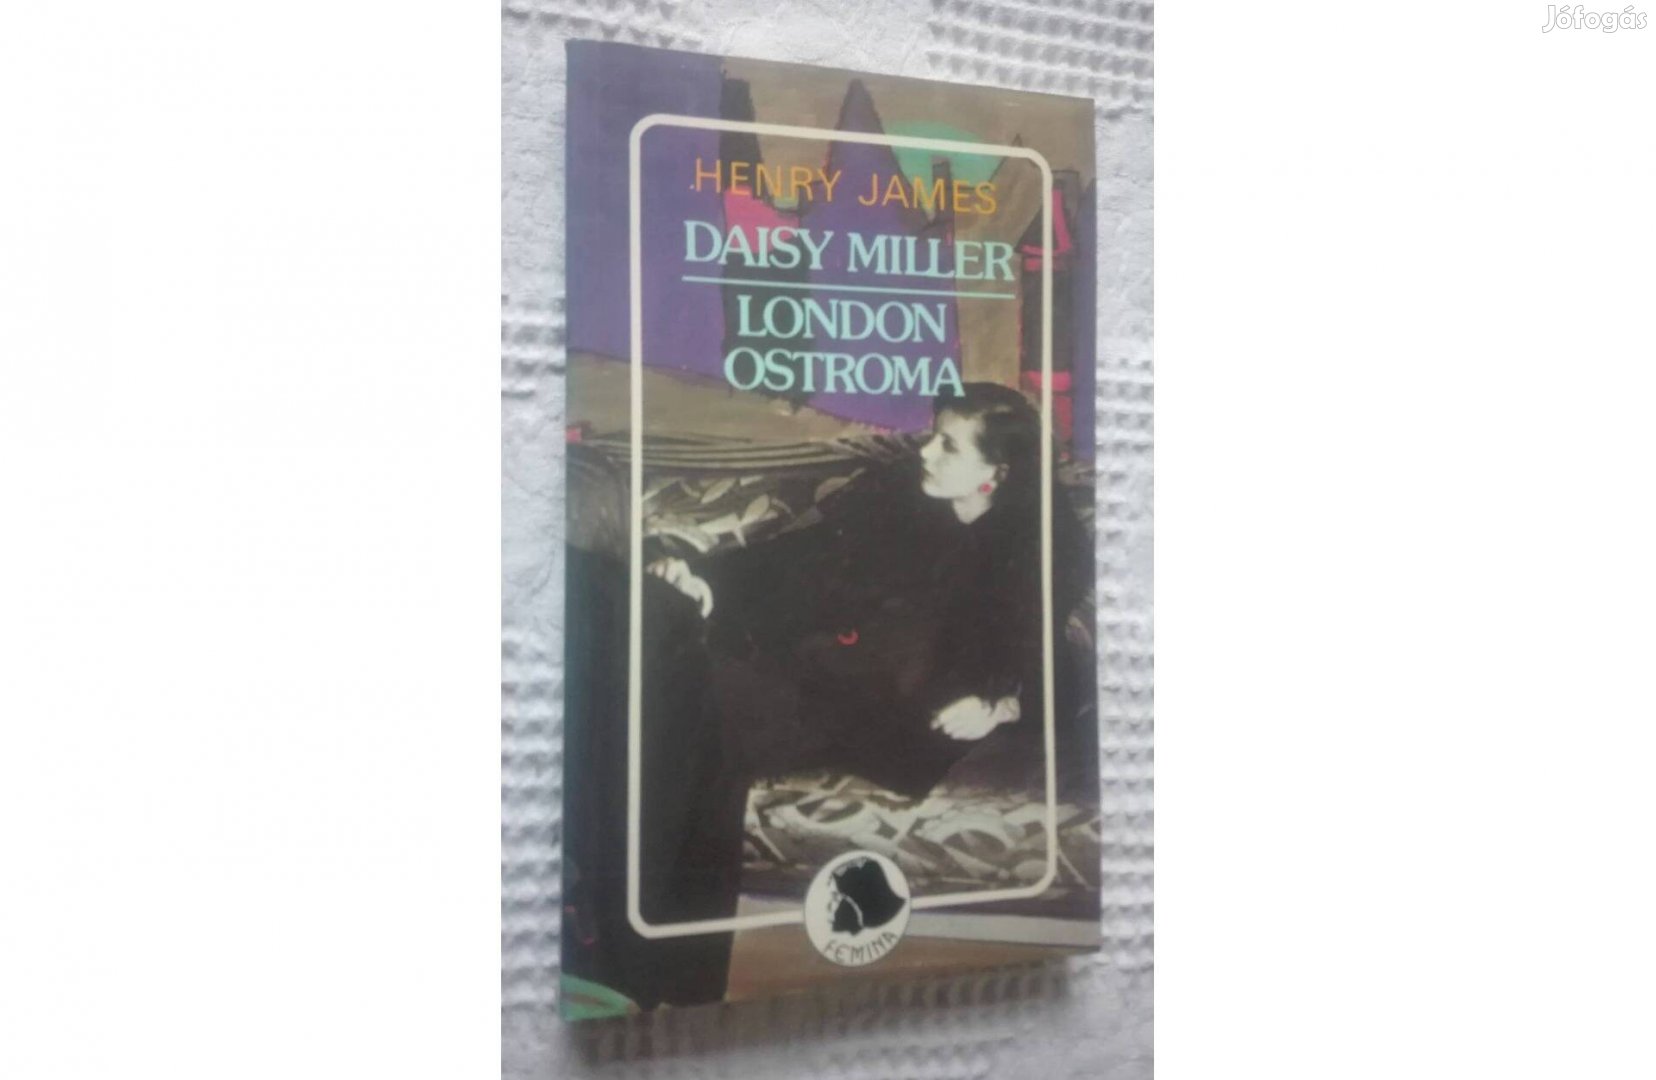 Daisy Miller,London ostroma, írta: Henry James, Femina könyv